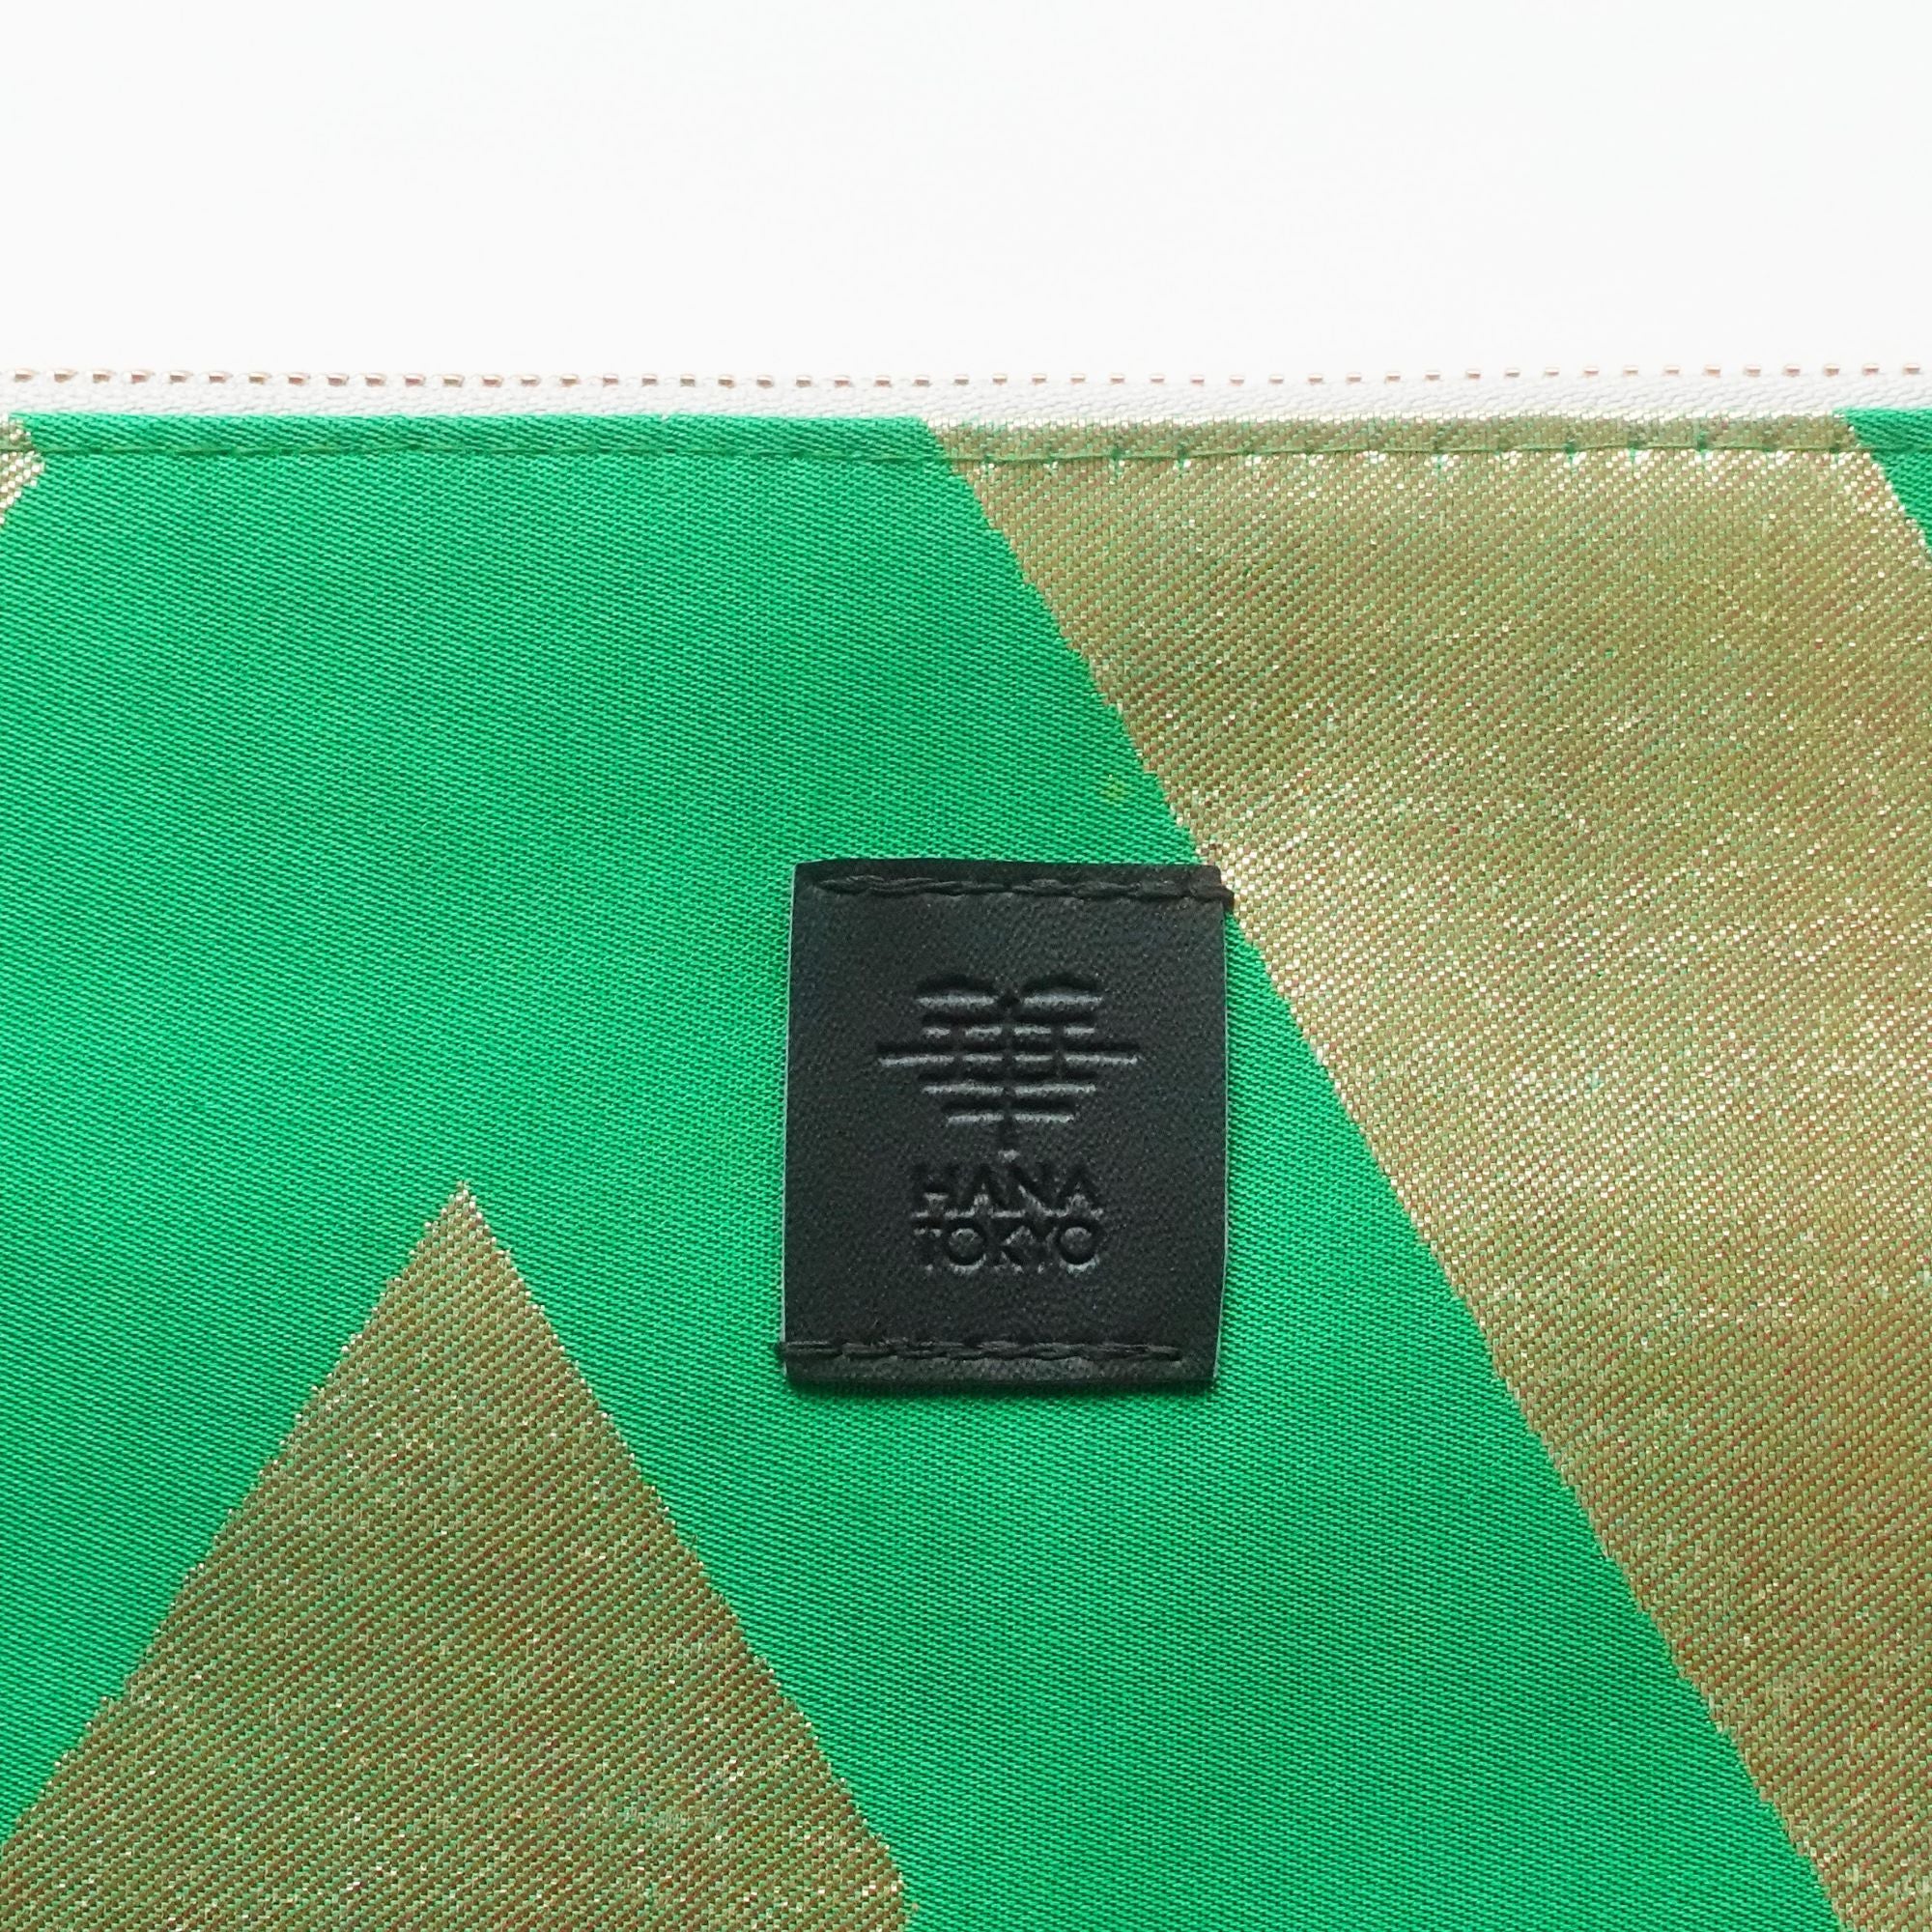 HANA TOKYO / 帯ノートパソコンケース [ グリーン×ゴールド 紗綾形 ] Laptop sleeve